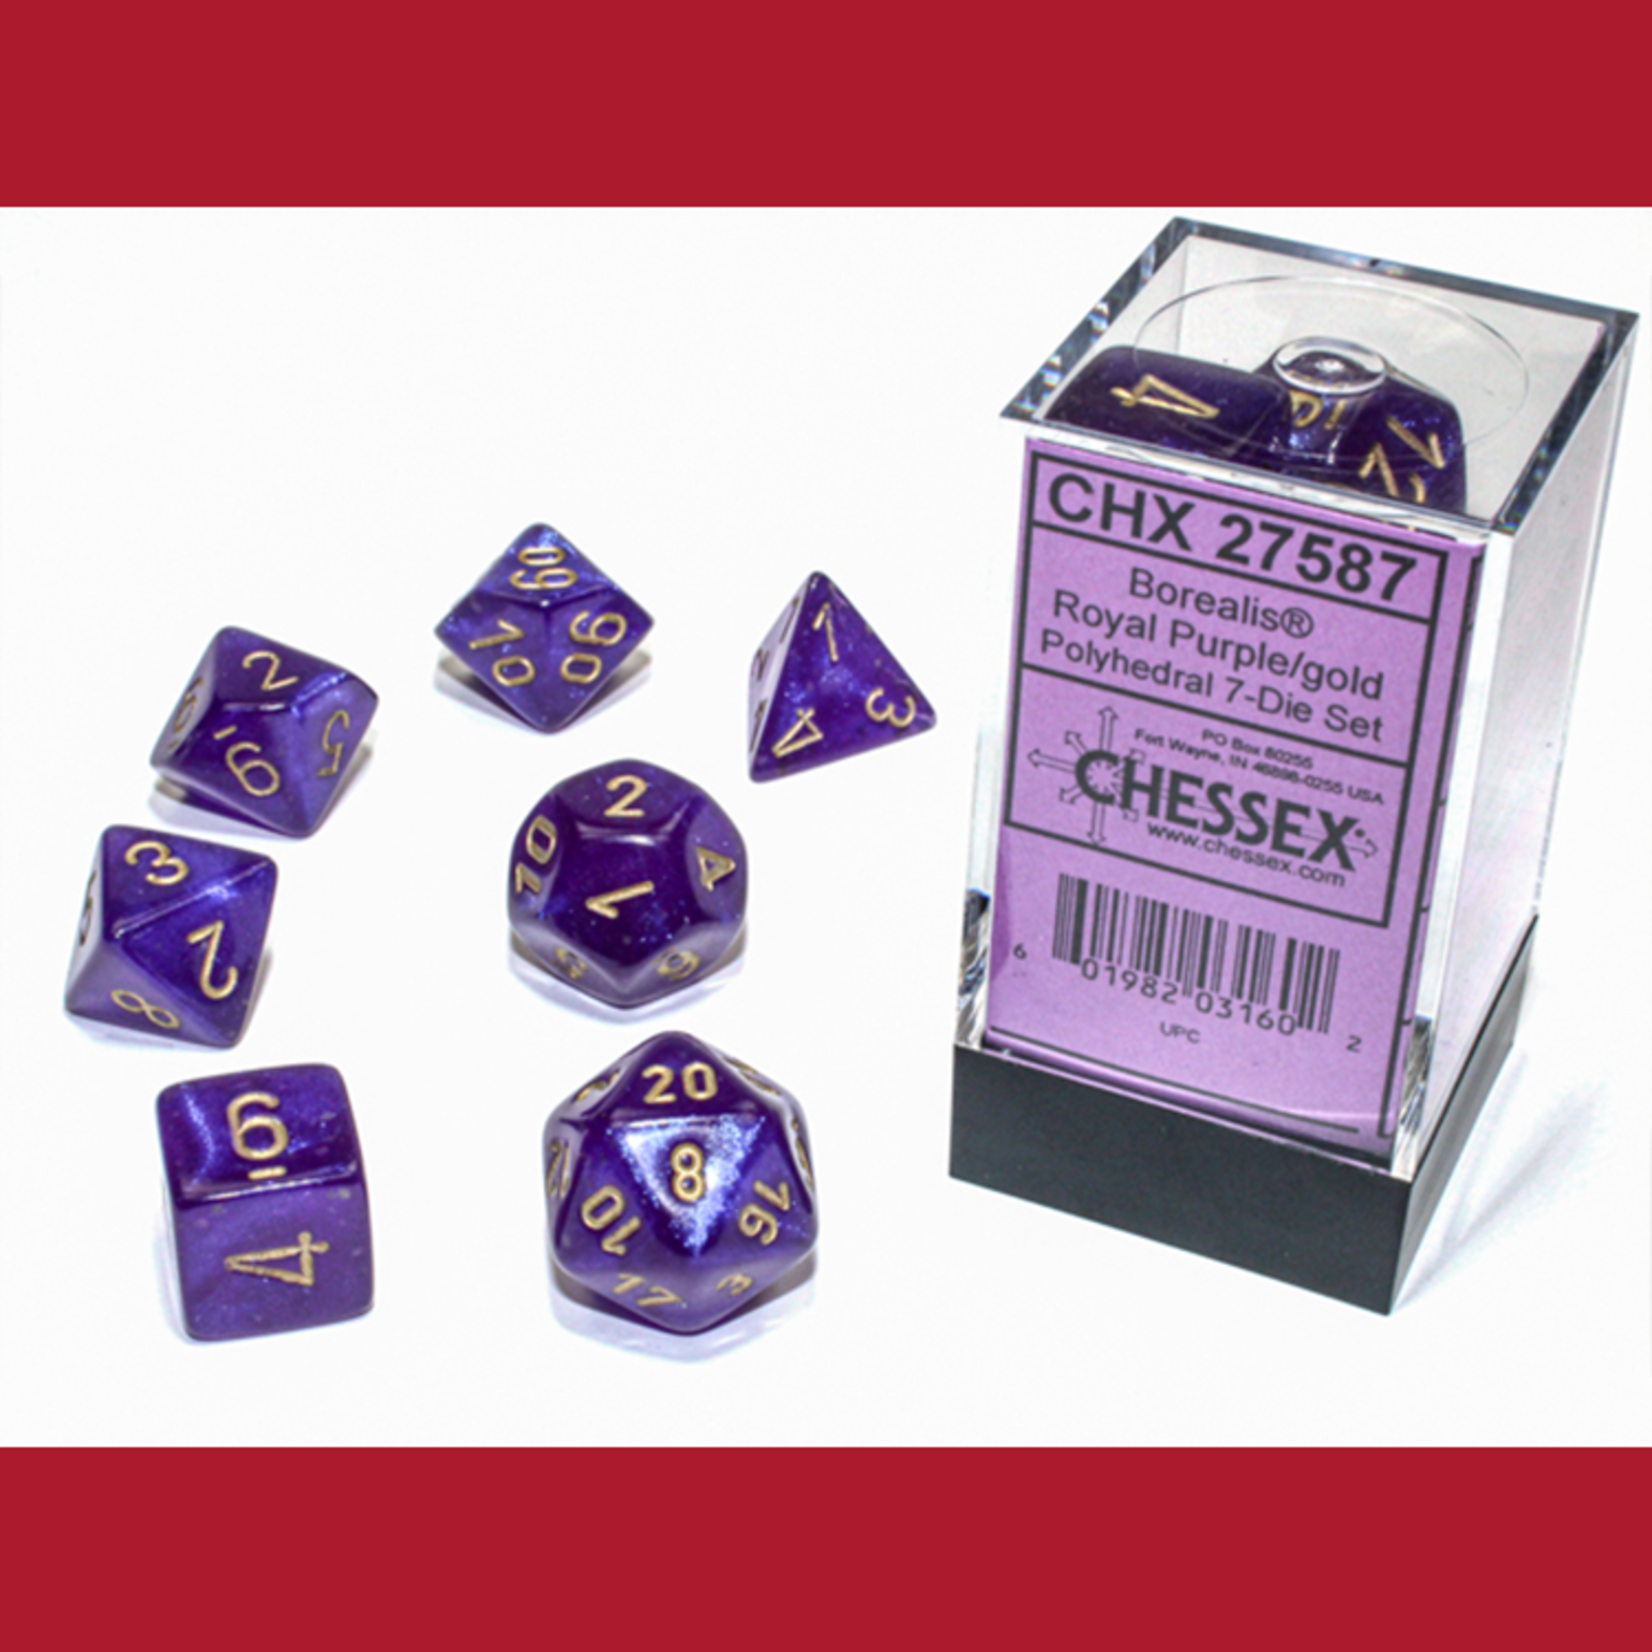 Chessex CHX 27587 Borealis Luminary Royal Purple / Gold Polyhedral 7-die Set